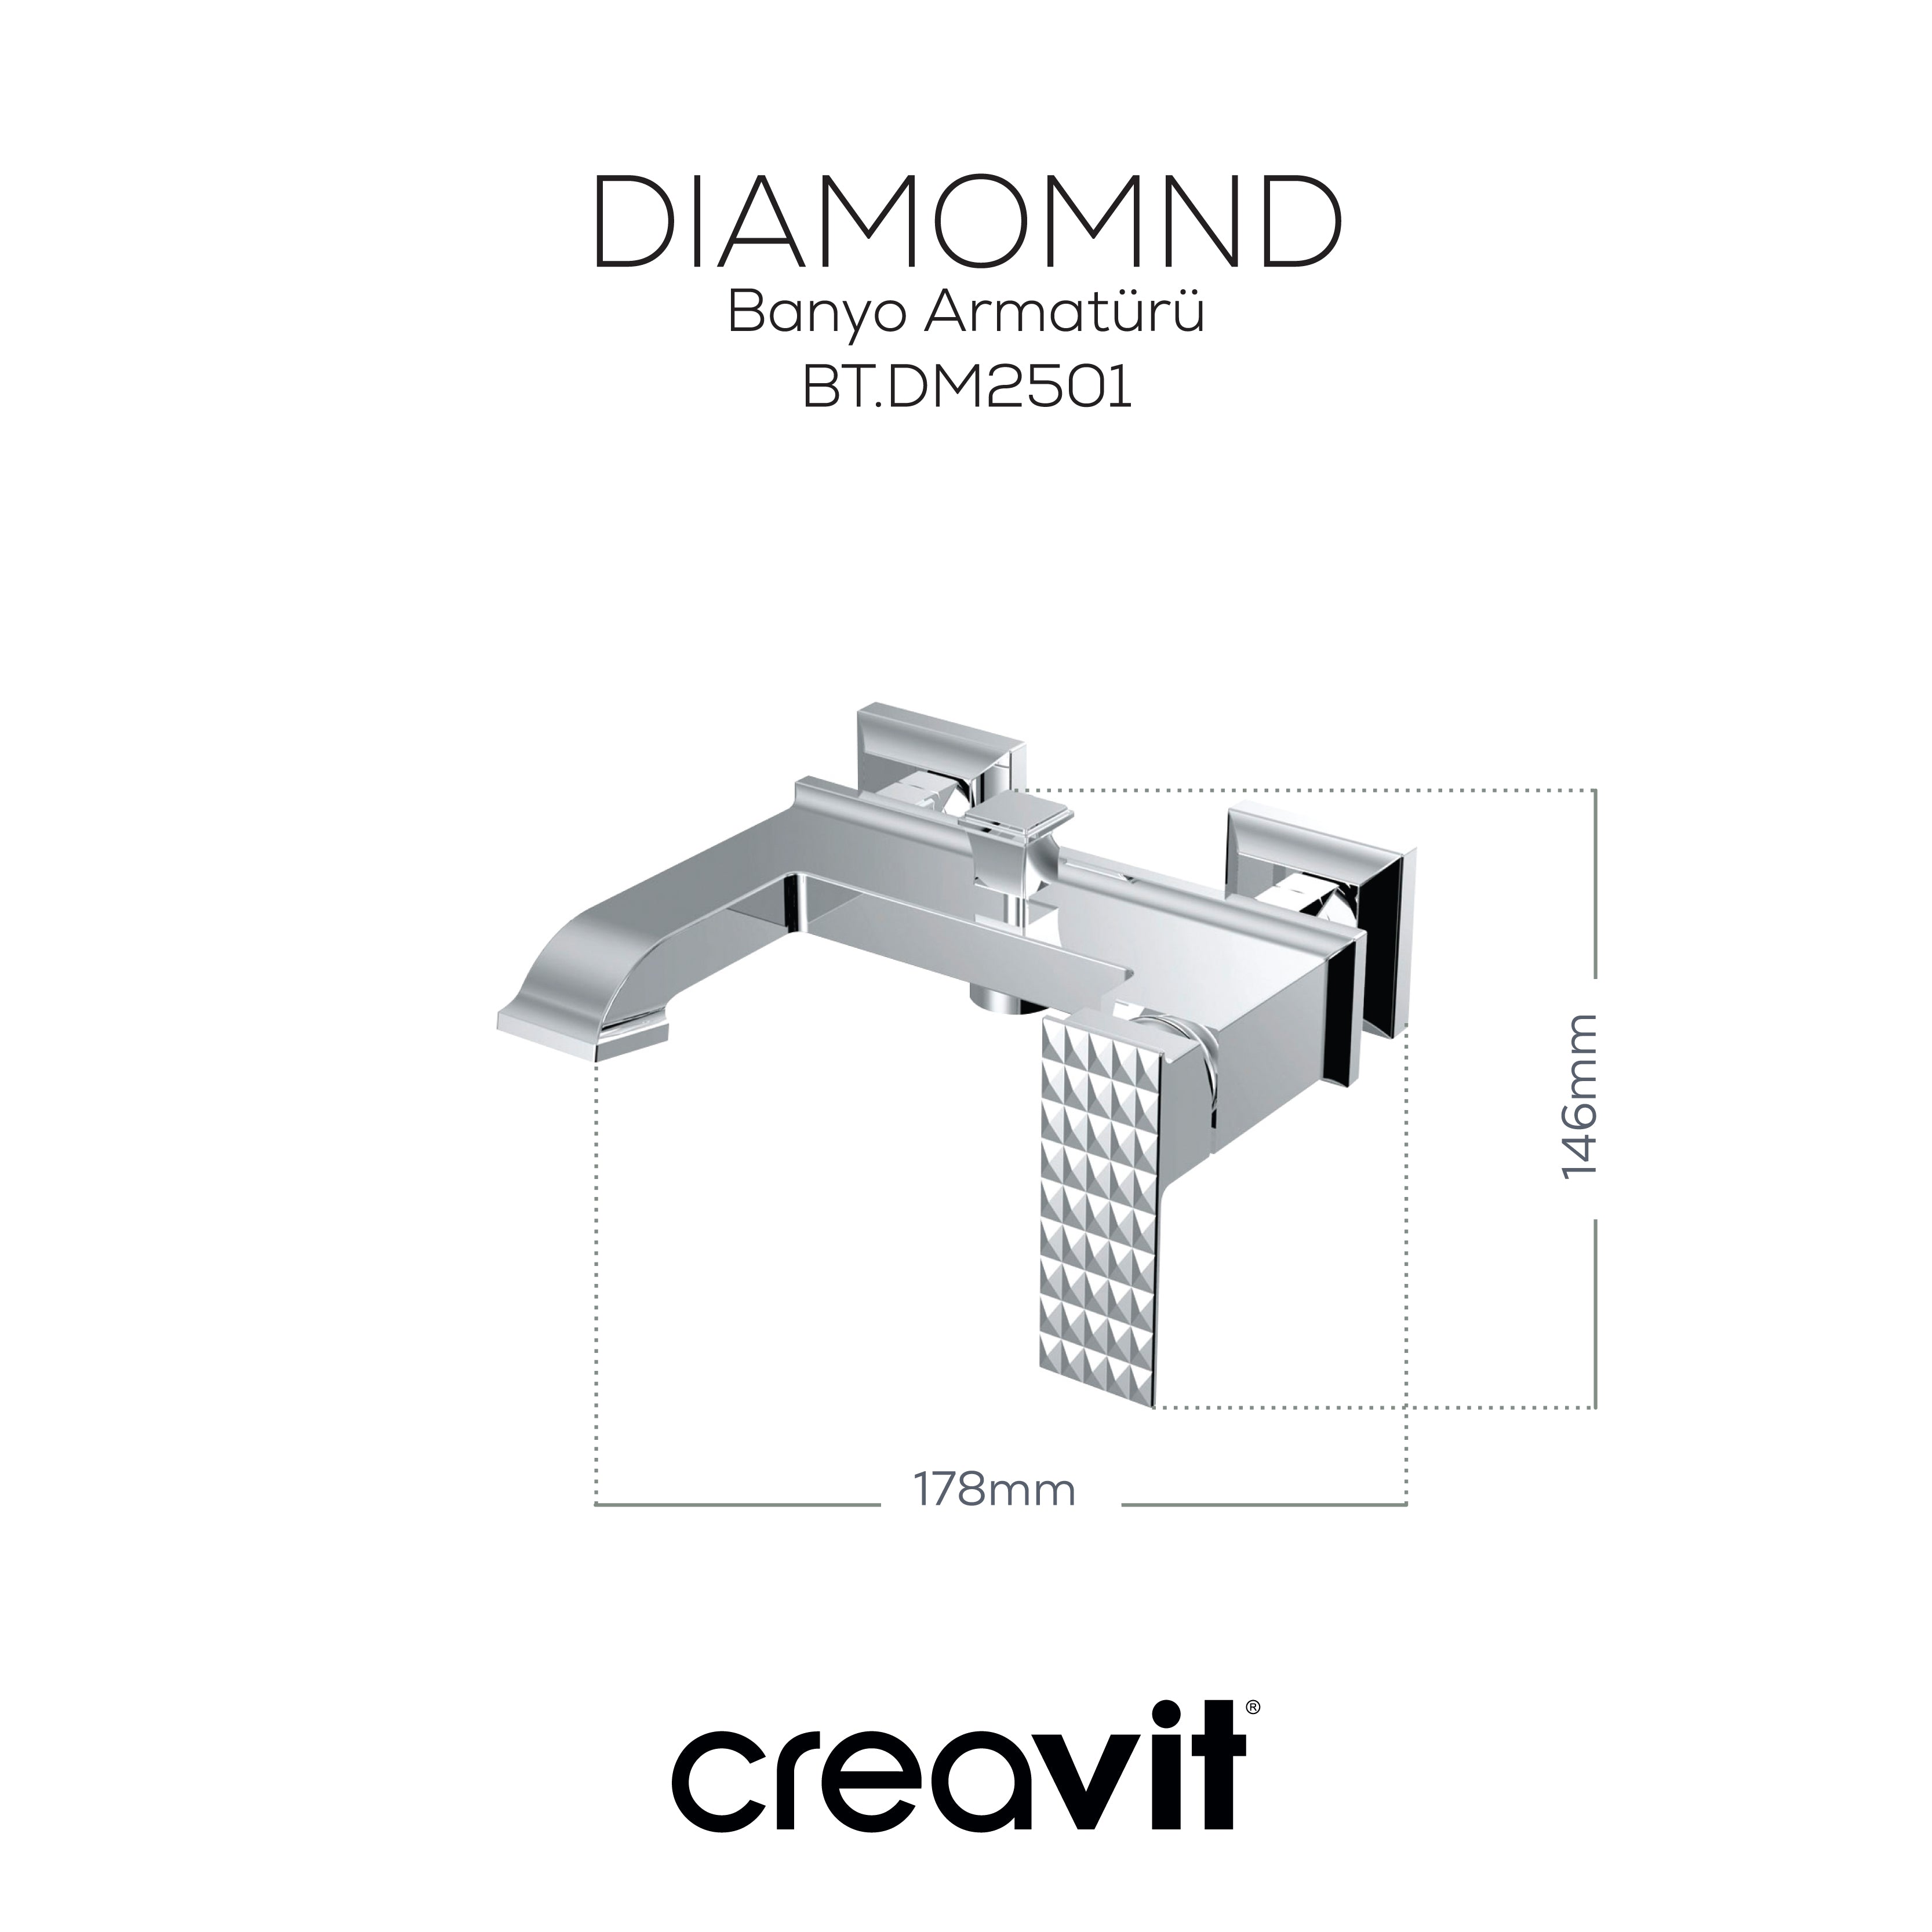 Diamond Banyo Armatürü Krom - Creavit | Banyo Bu Tarafta